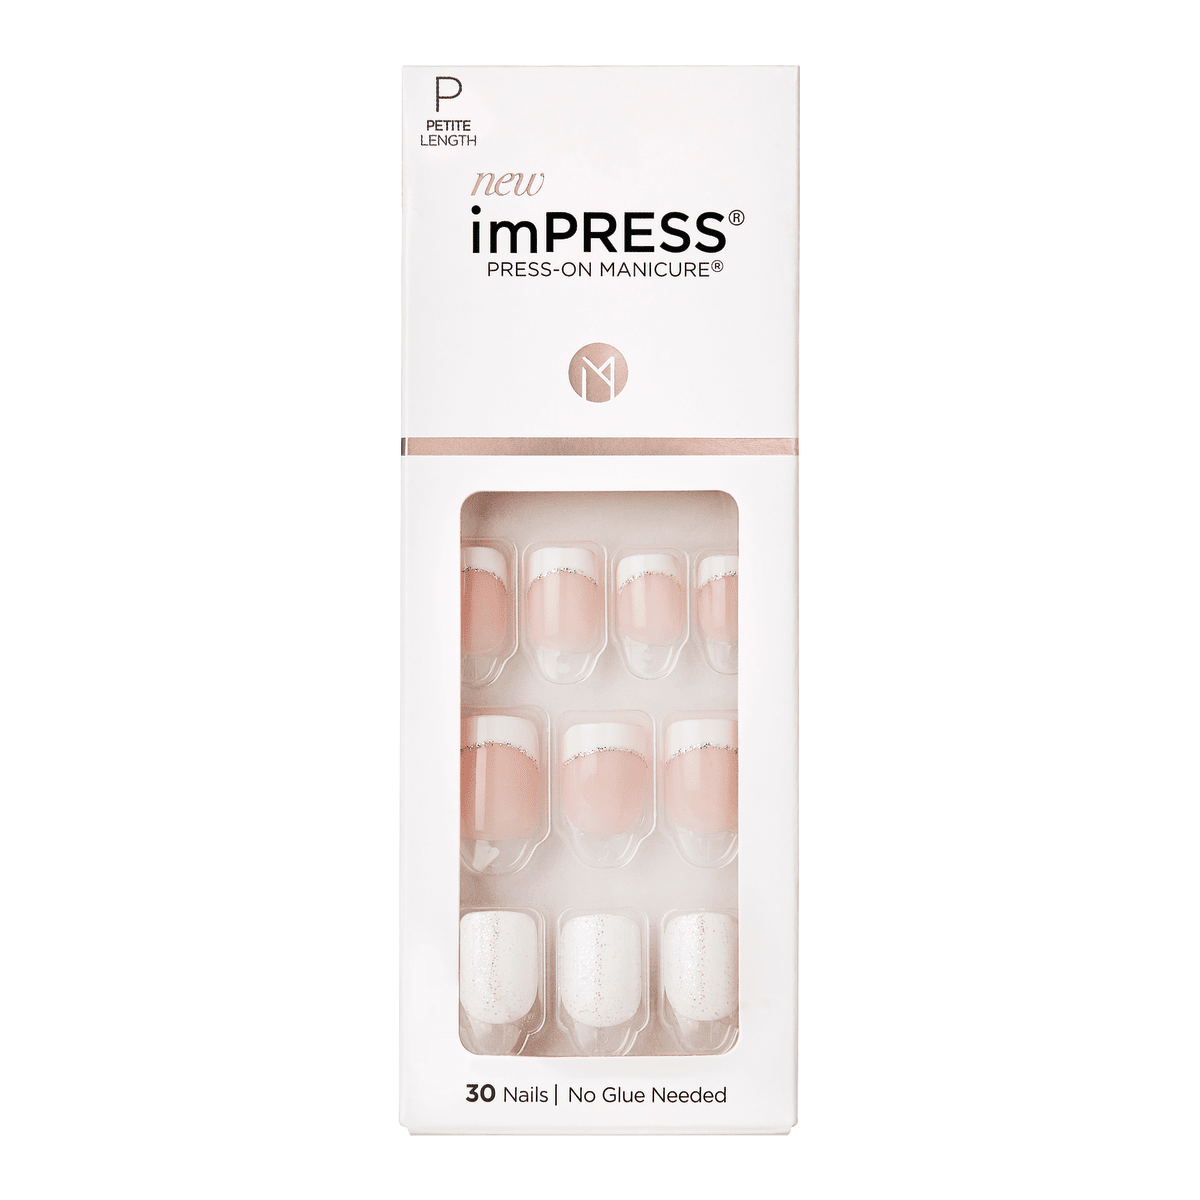 imPRESS Press-On Manicure Petite - My Mani